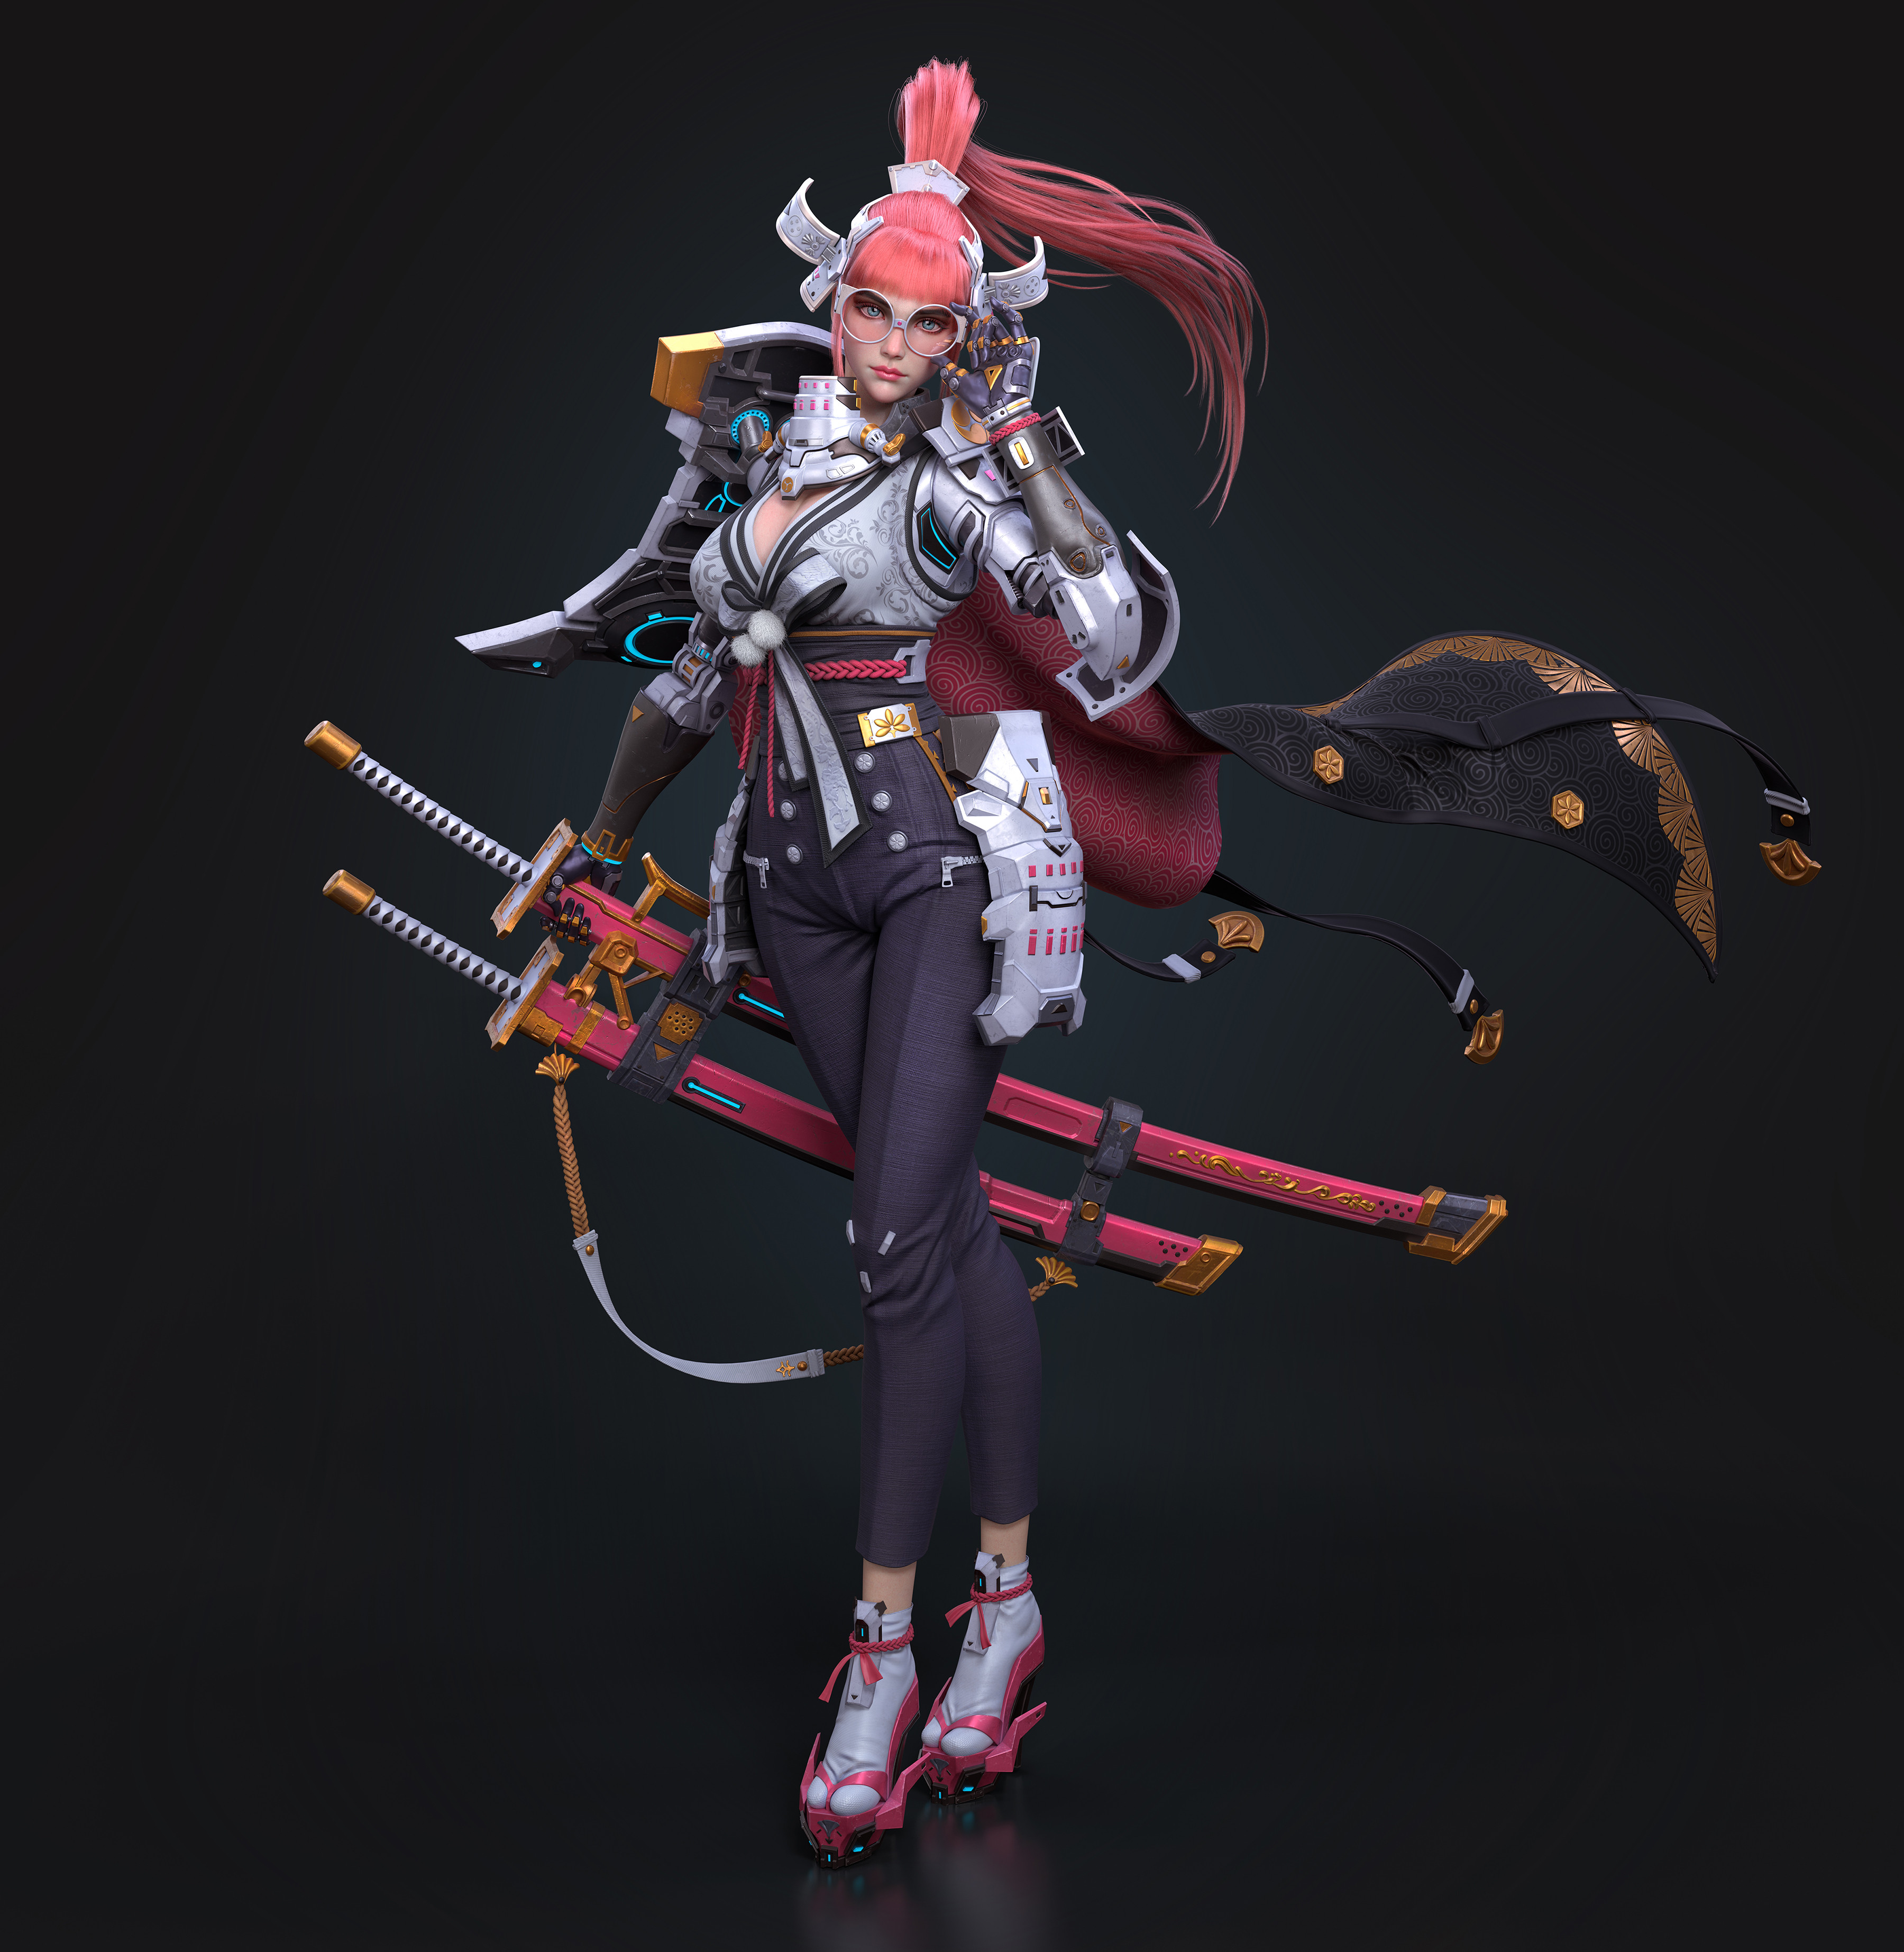 General 3600x3691 Cifangyi CGI women pink hair long hair ponytail weapon katana bodysuit cape wind pink glasses armor blue eyes